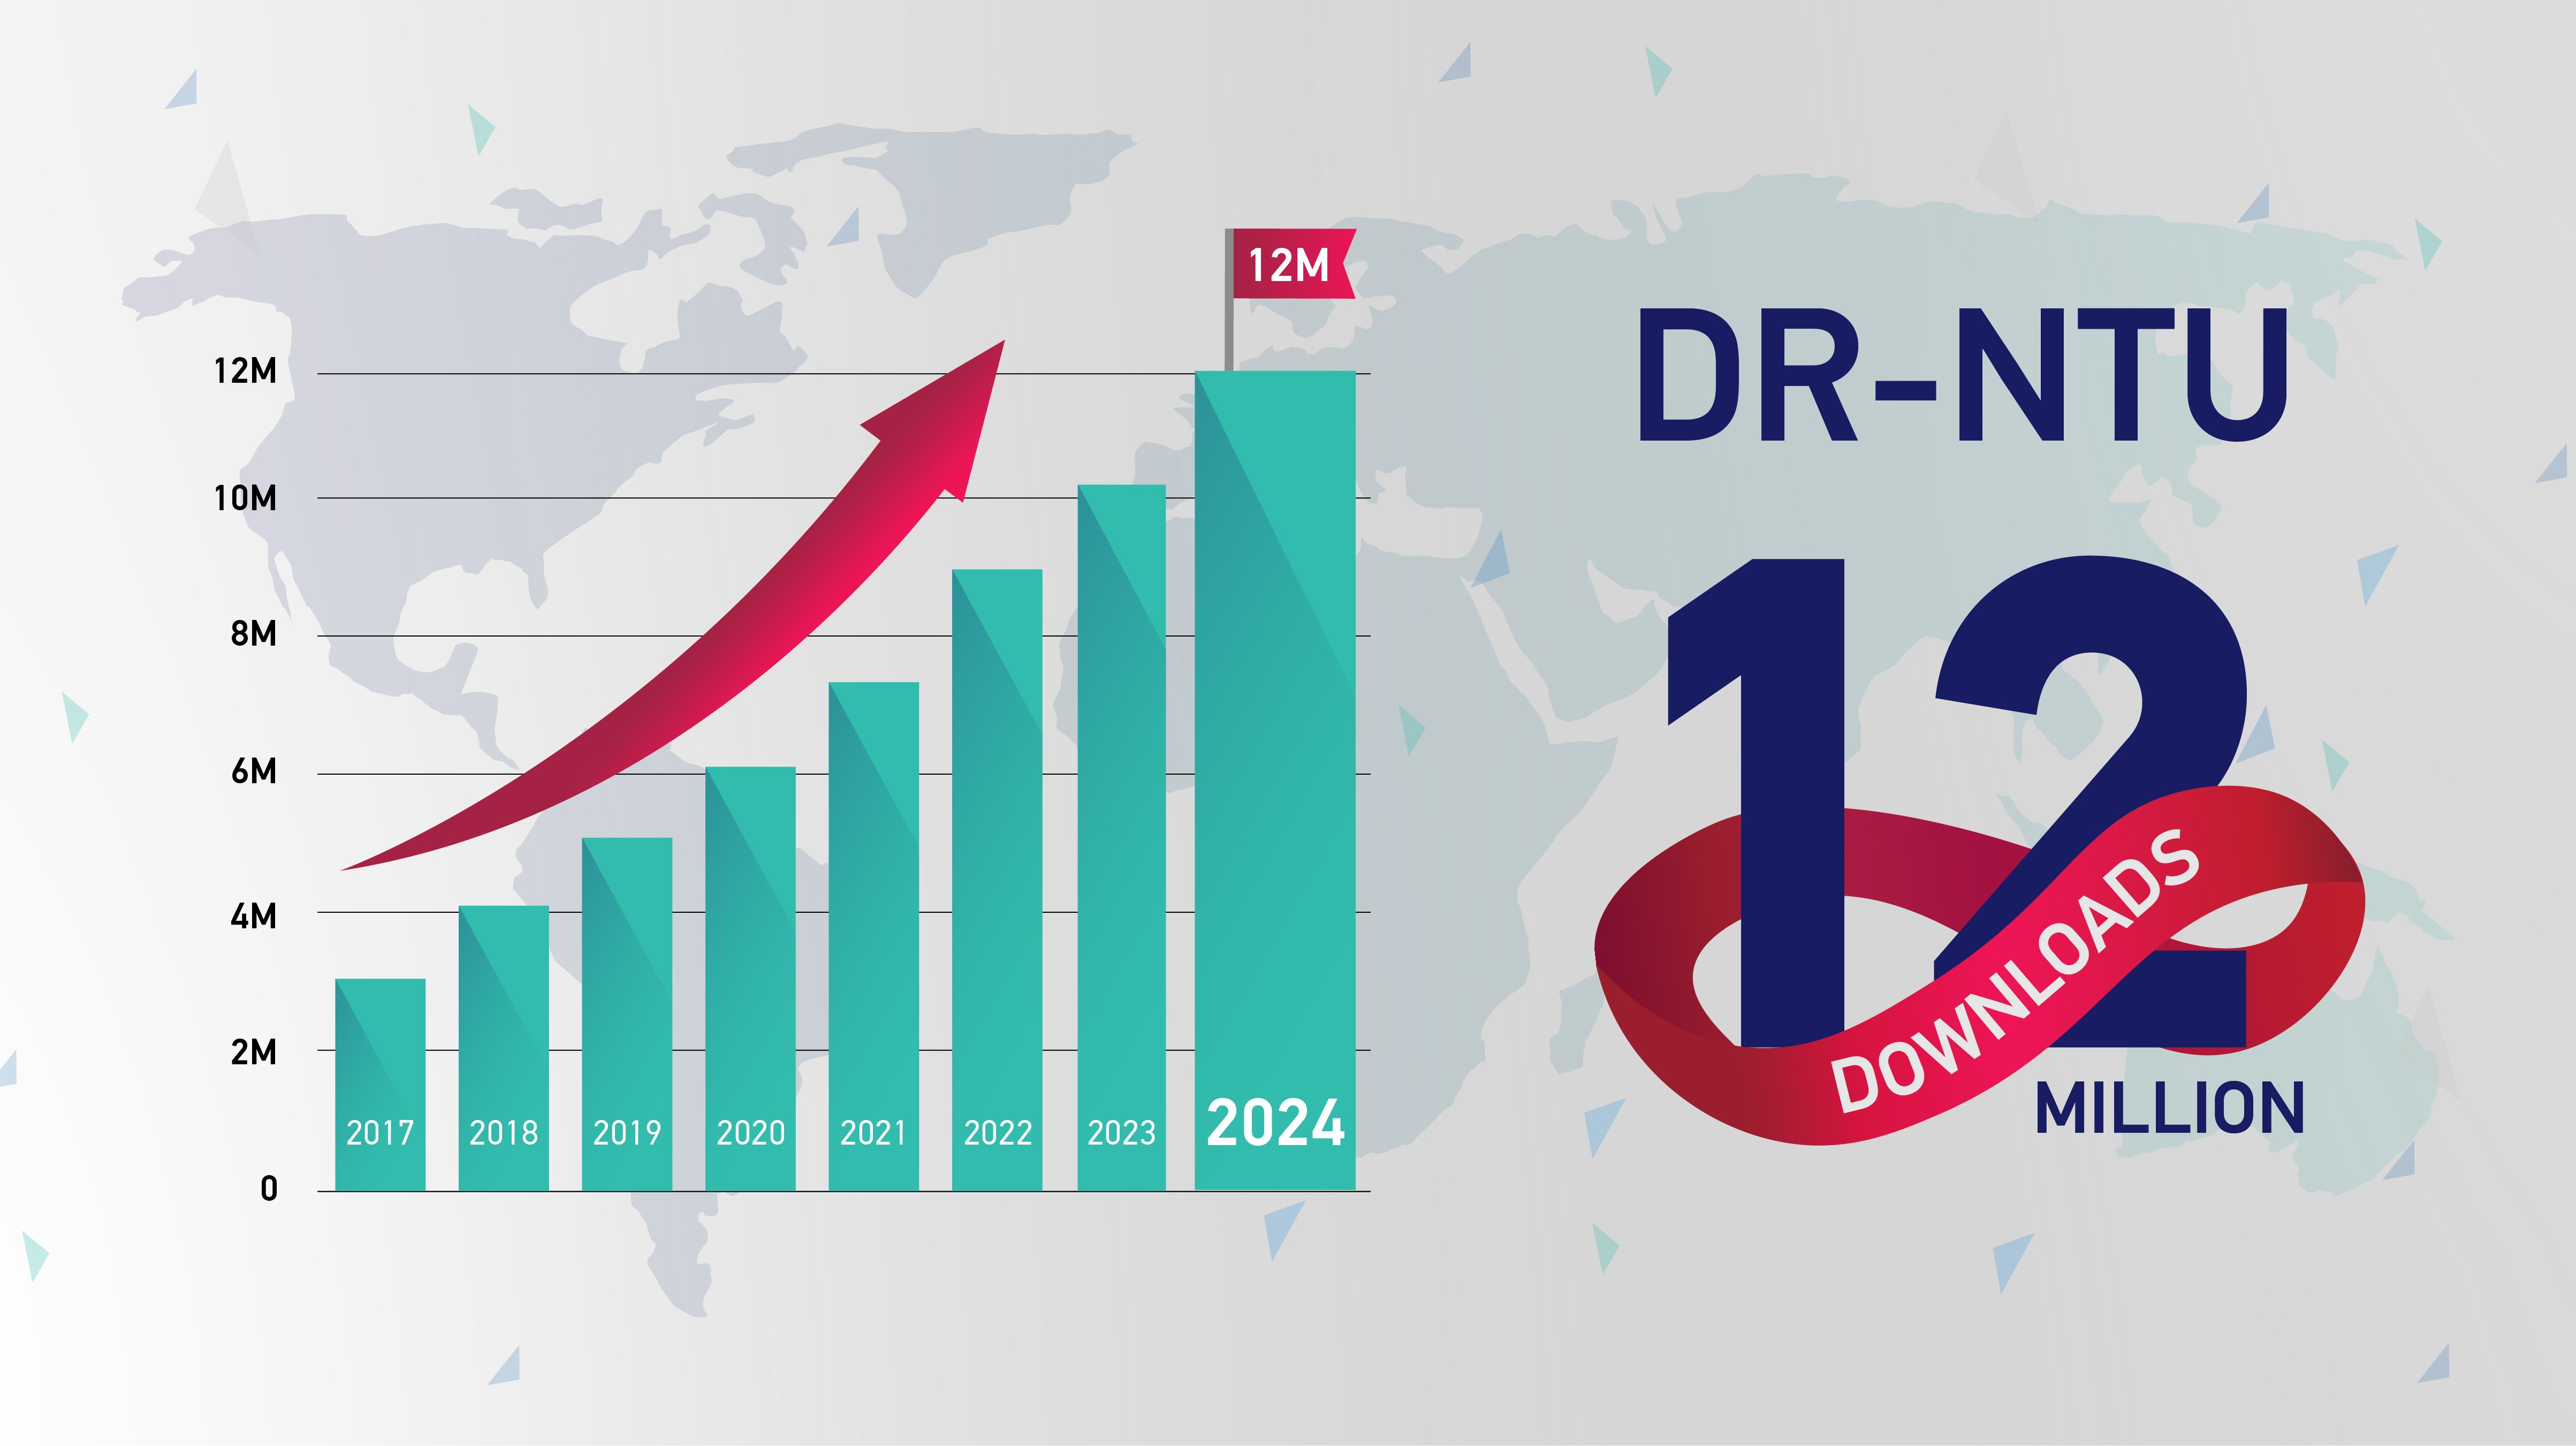 DR-NTU 12M Downloads